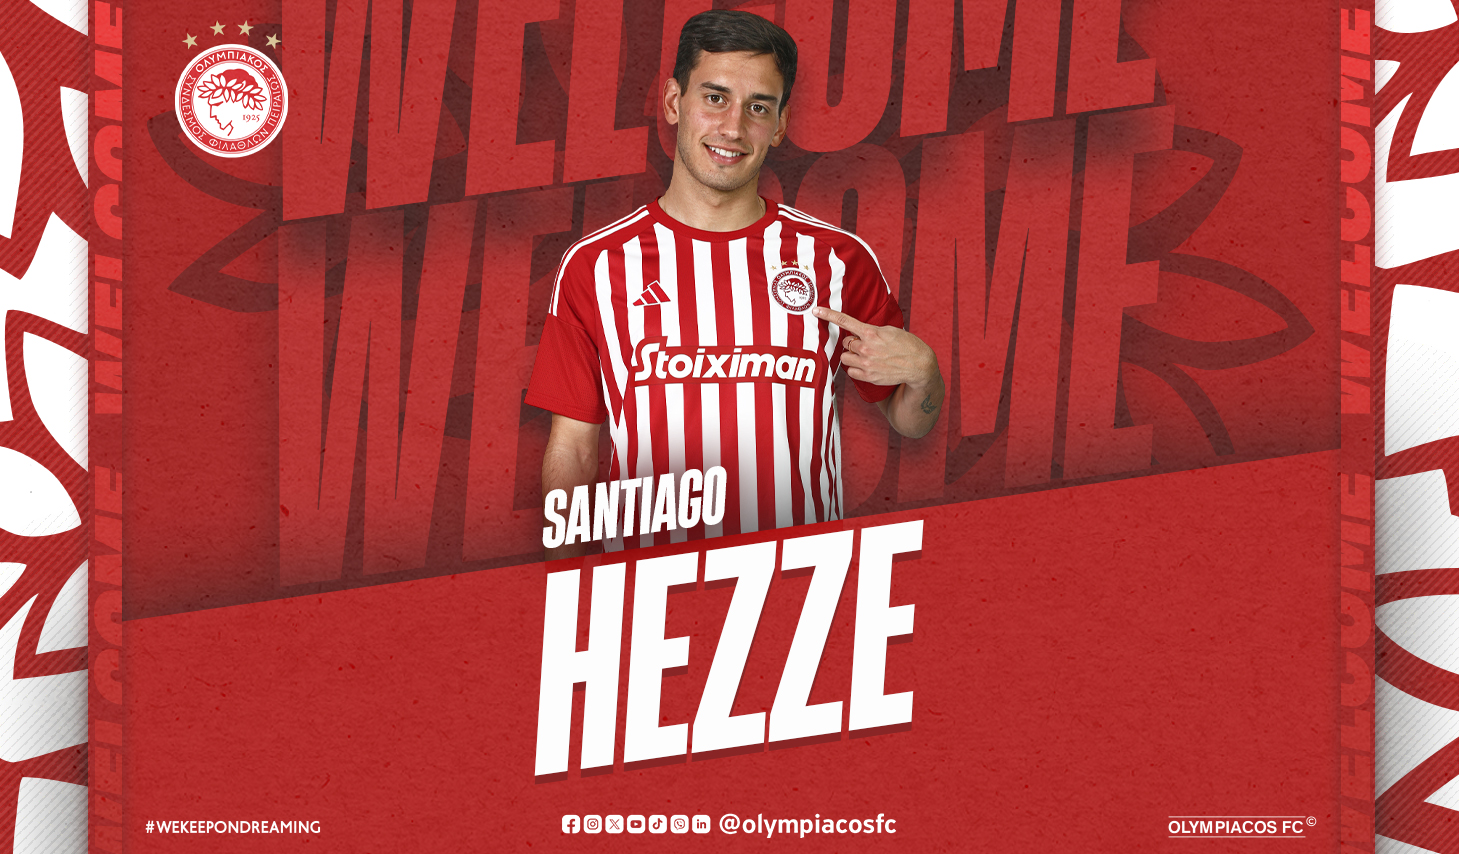 Santiago Hezze joins Olympiacos